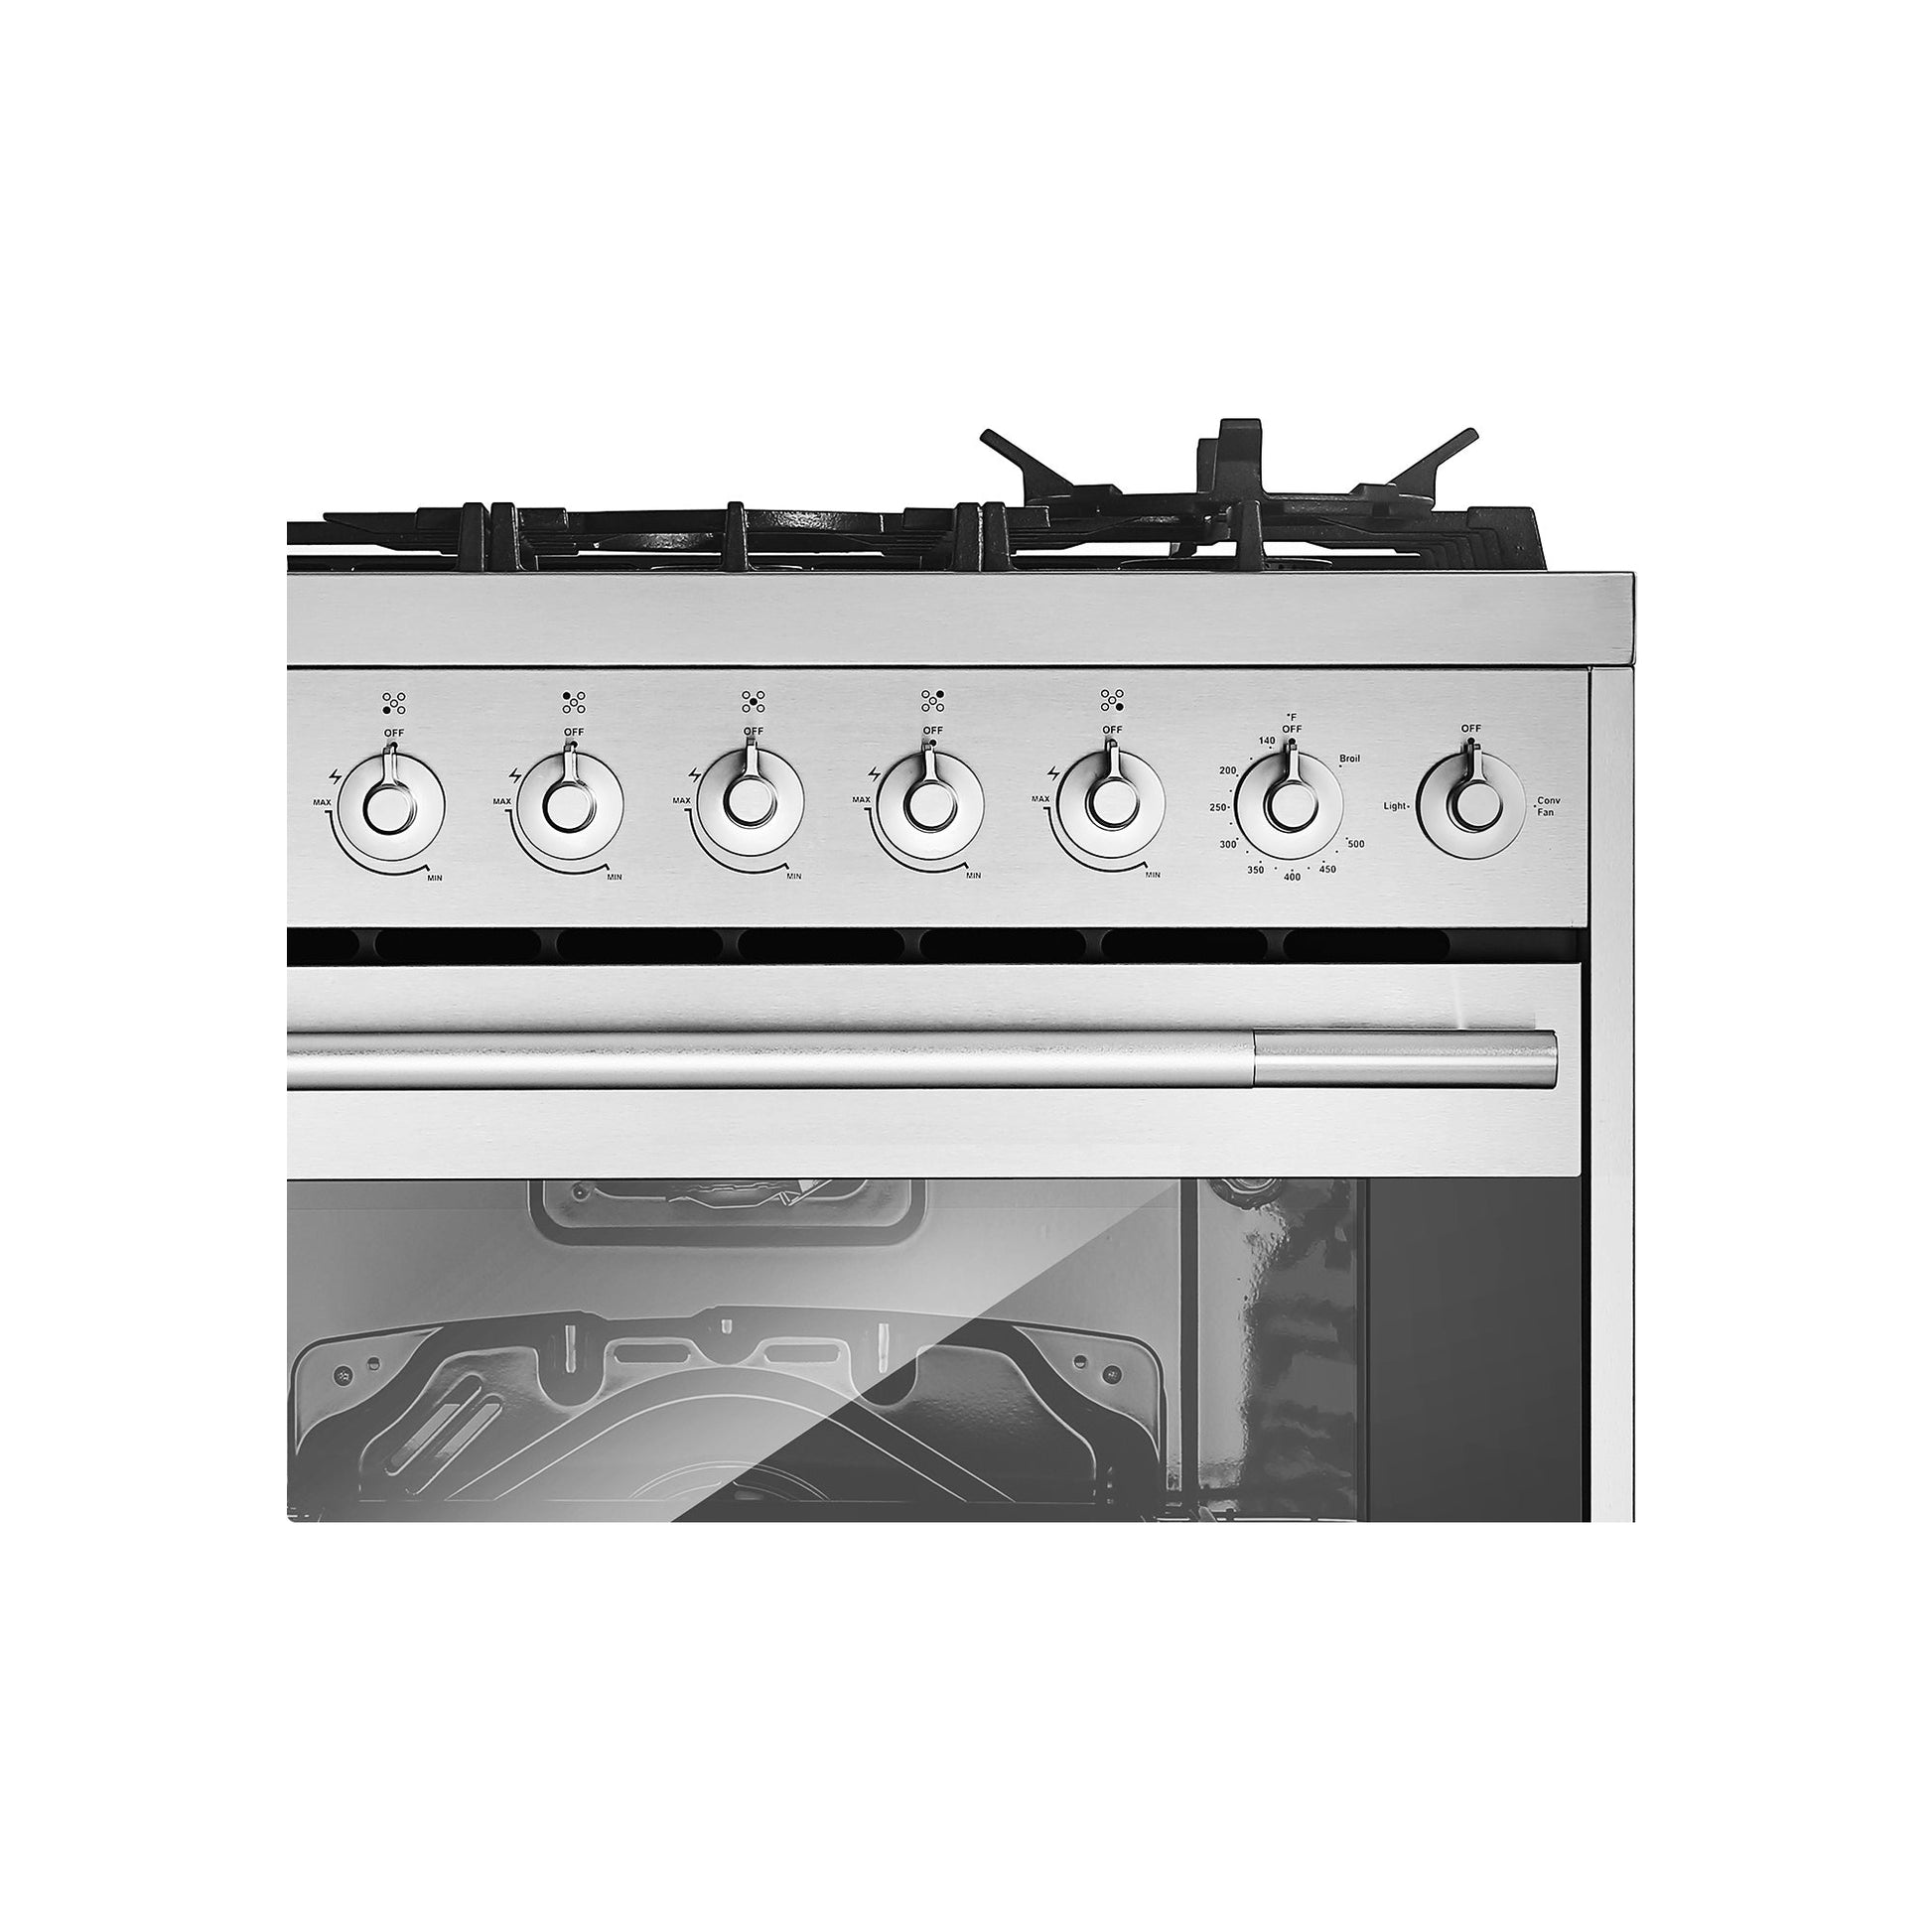 Empava 30" Freestanding Range Gas Cooktop And Oven - 5 Burners